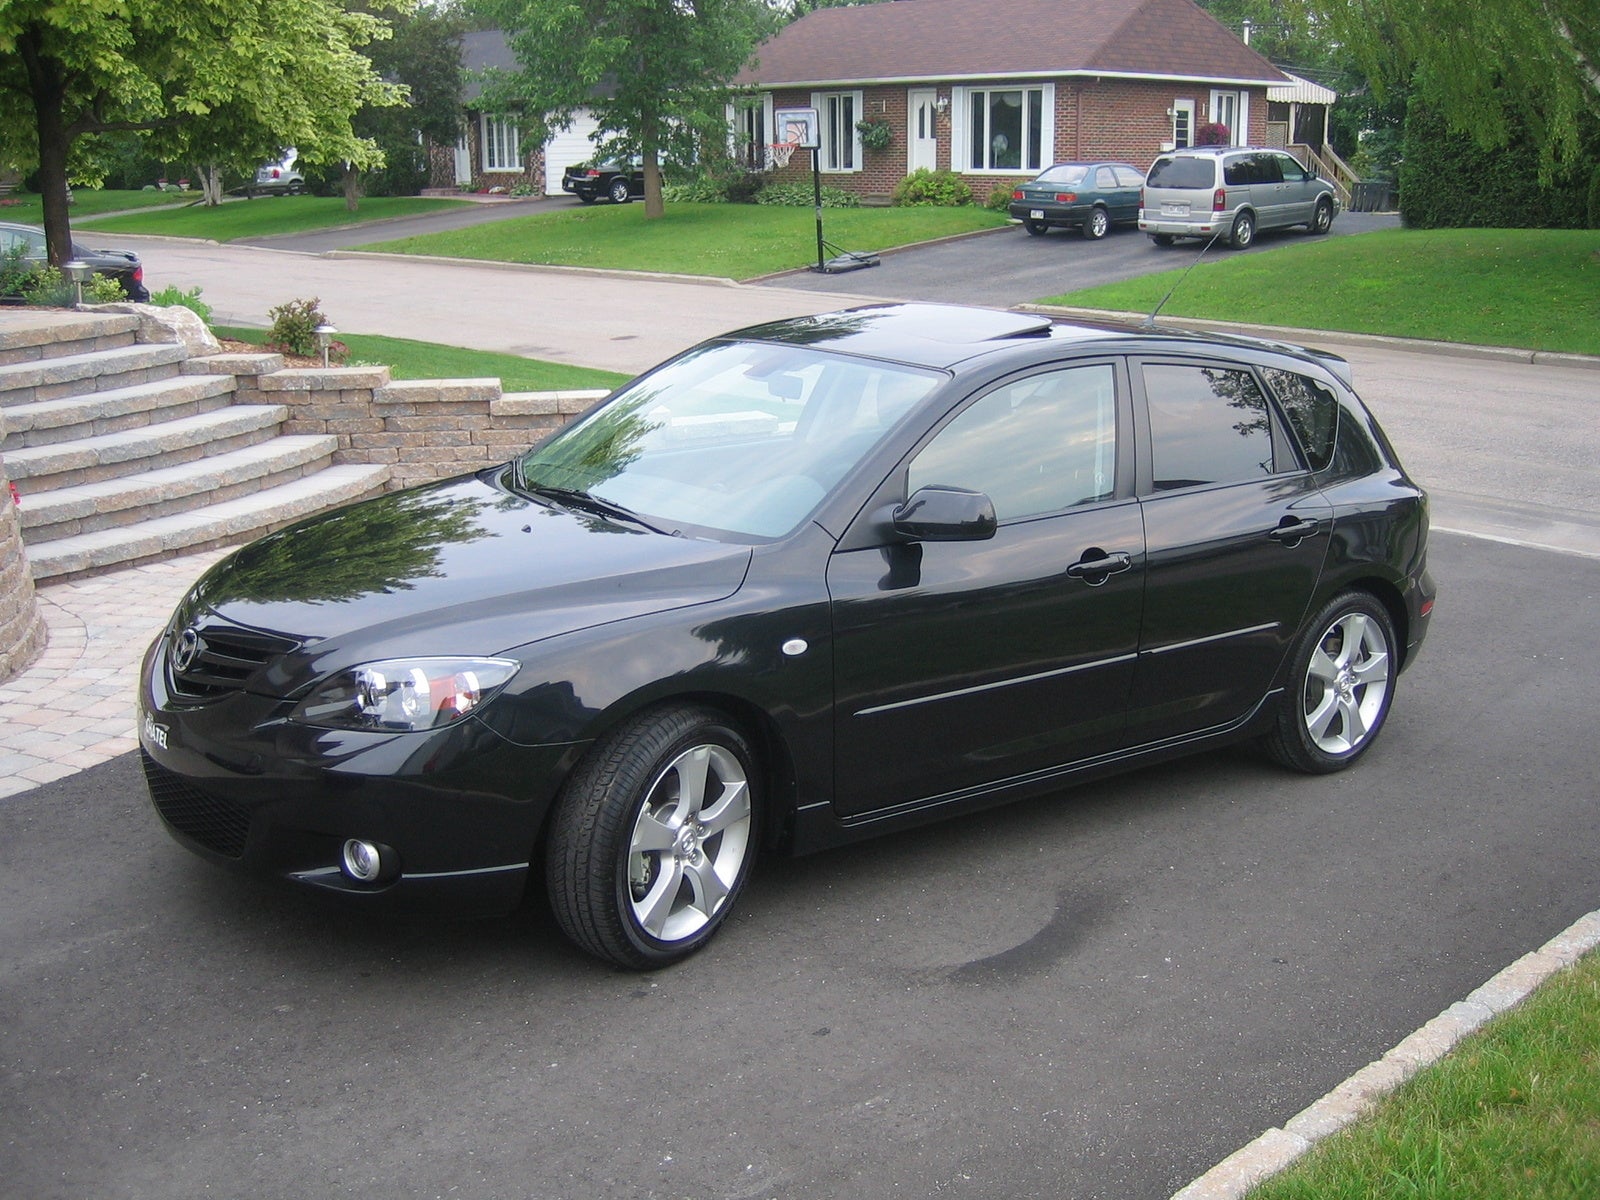 Мазда хэтчбек 2006. Mazda 3 2006 хэтчбек. Мазда 3 универсал 2006. Мазда 3 хэтчбек 2006 года.